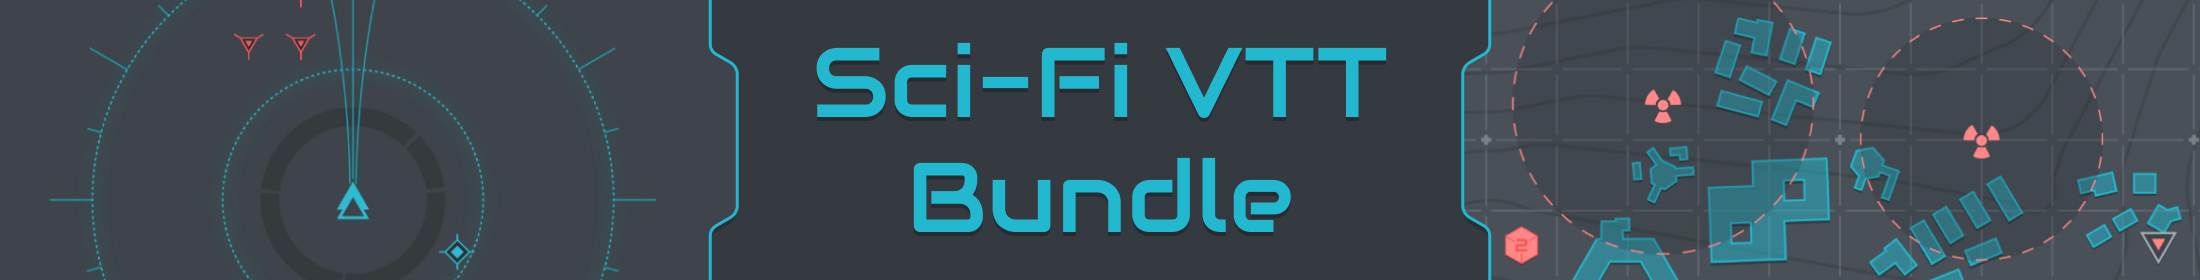 Sci-Fi VTT Bundle [BUNDLE]